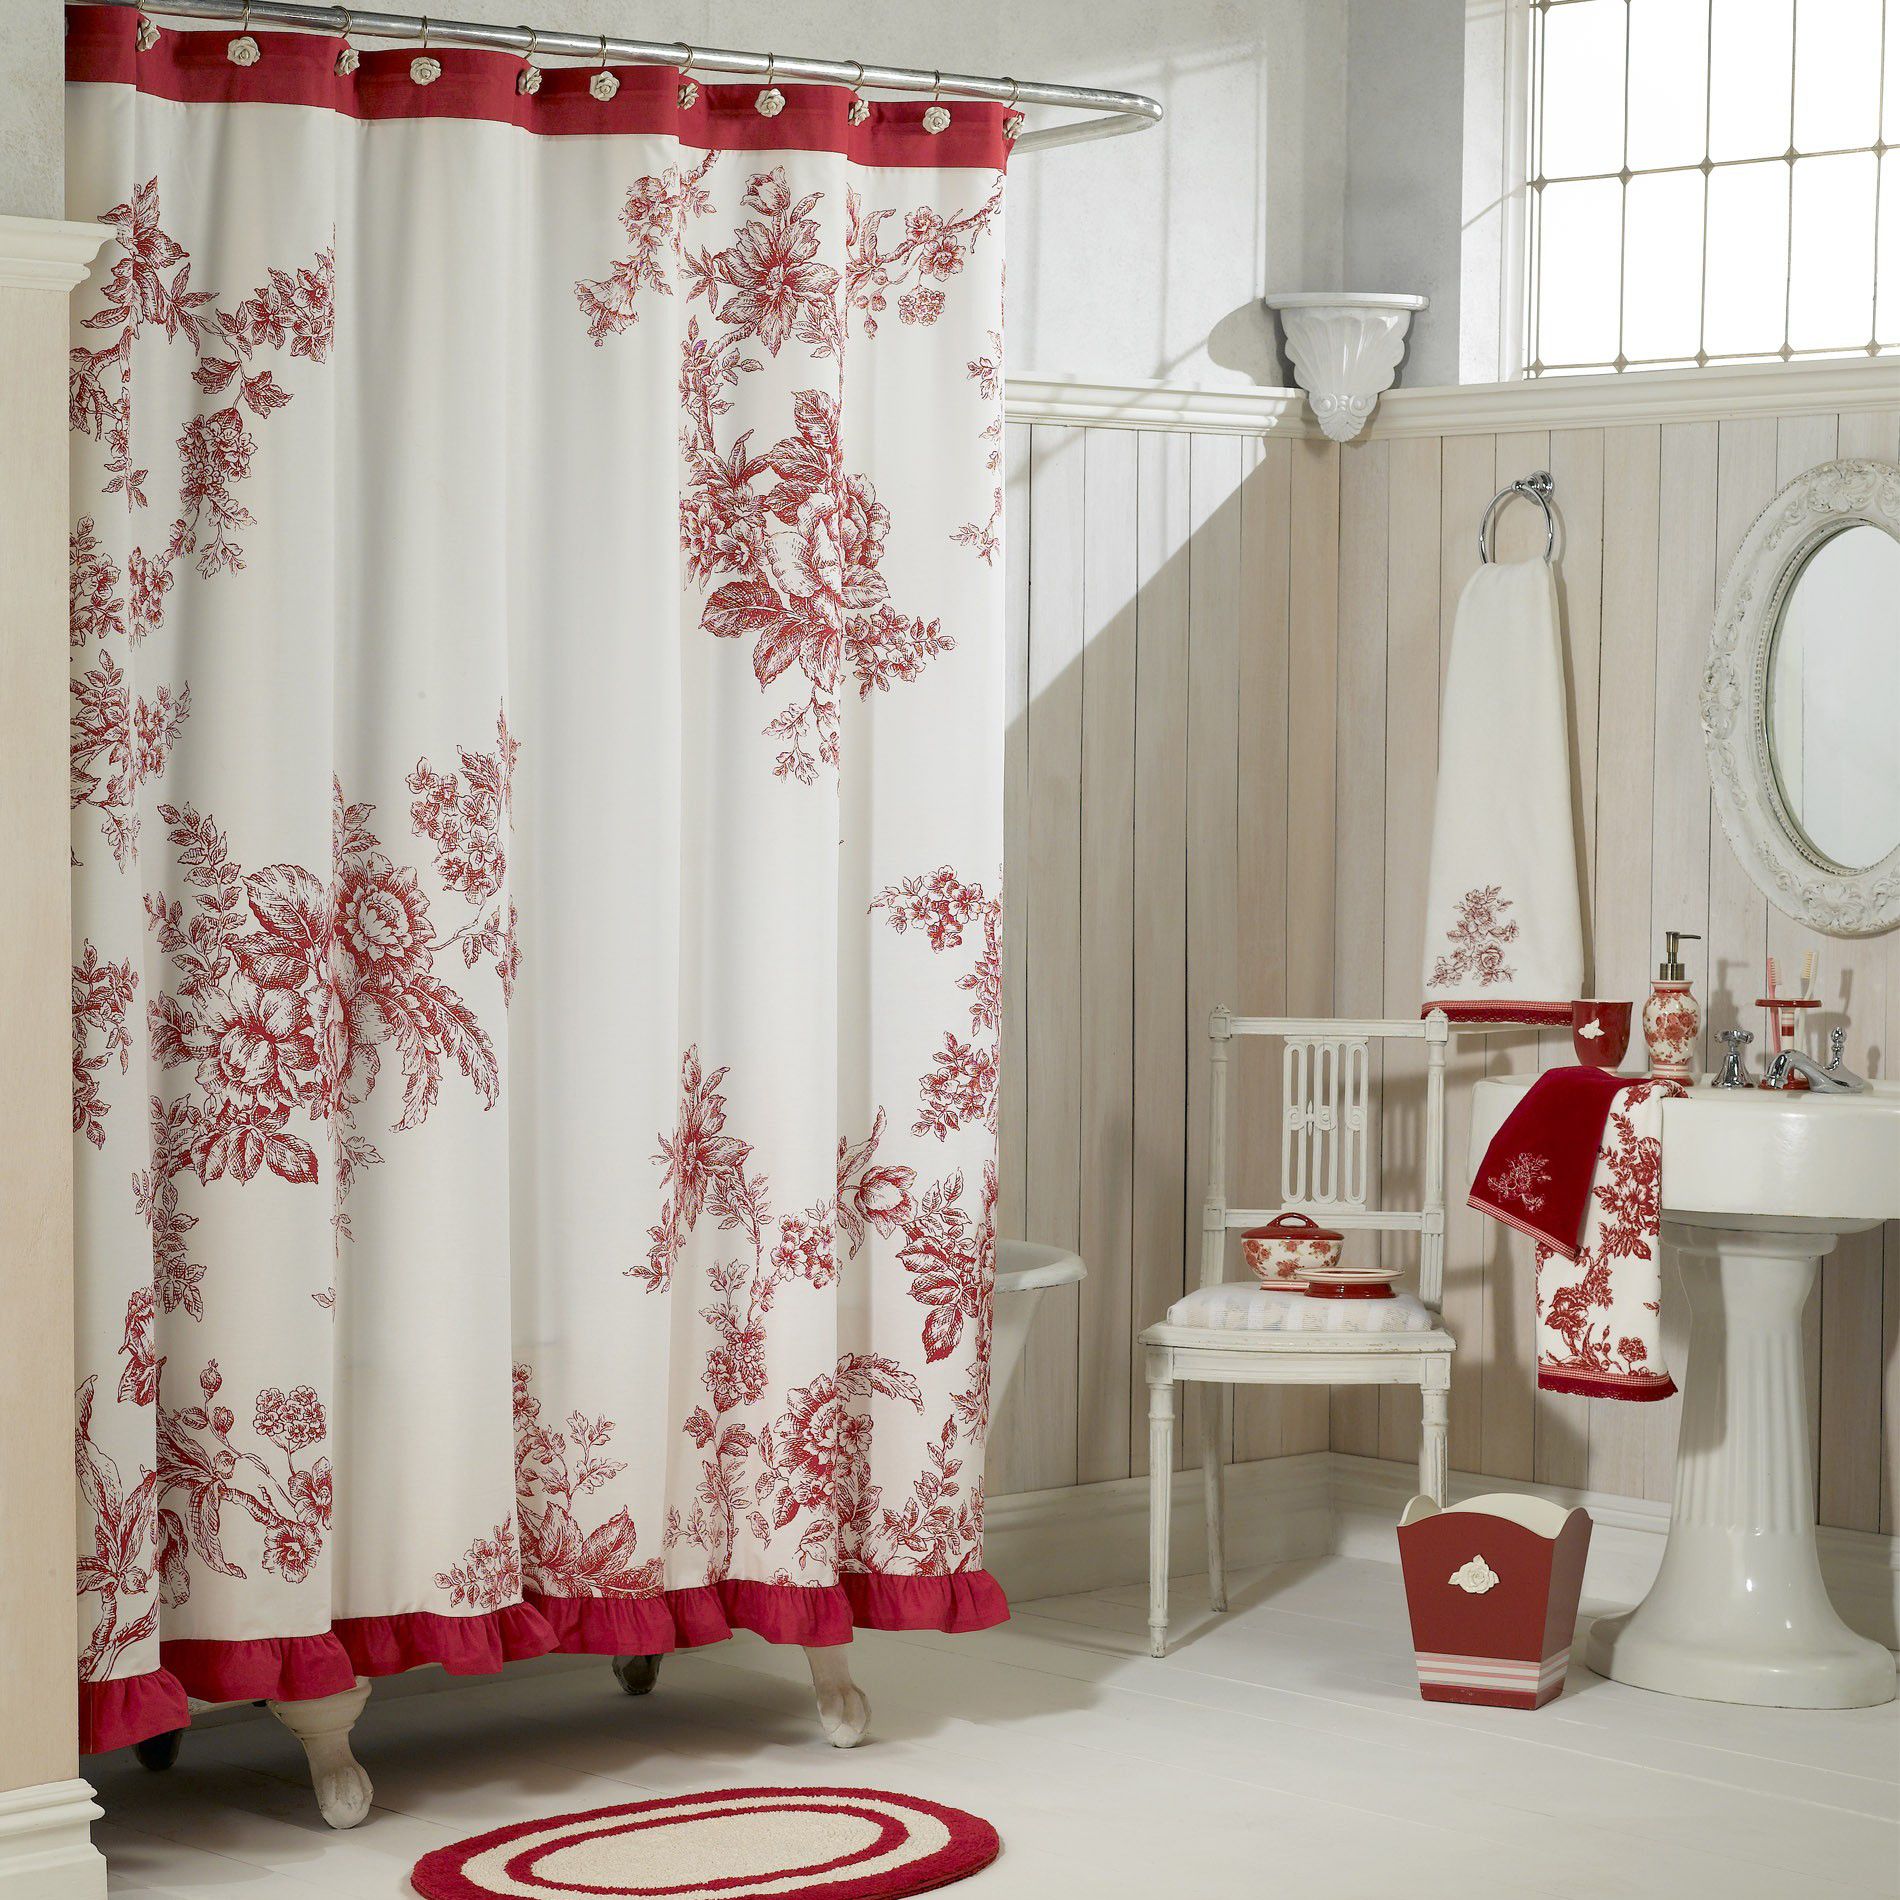 Kmart Shower Curtains | House Design